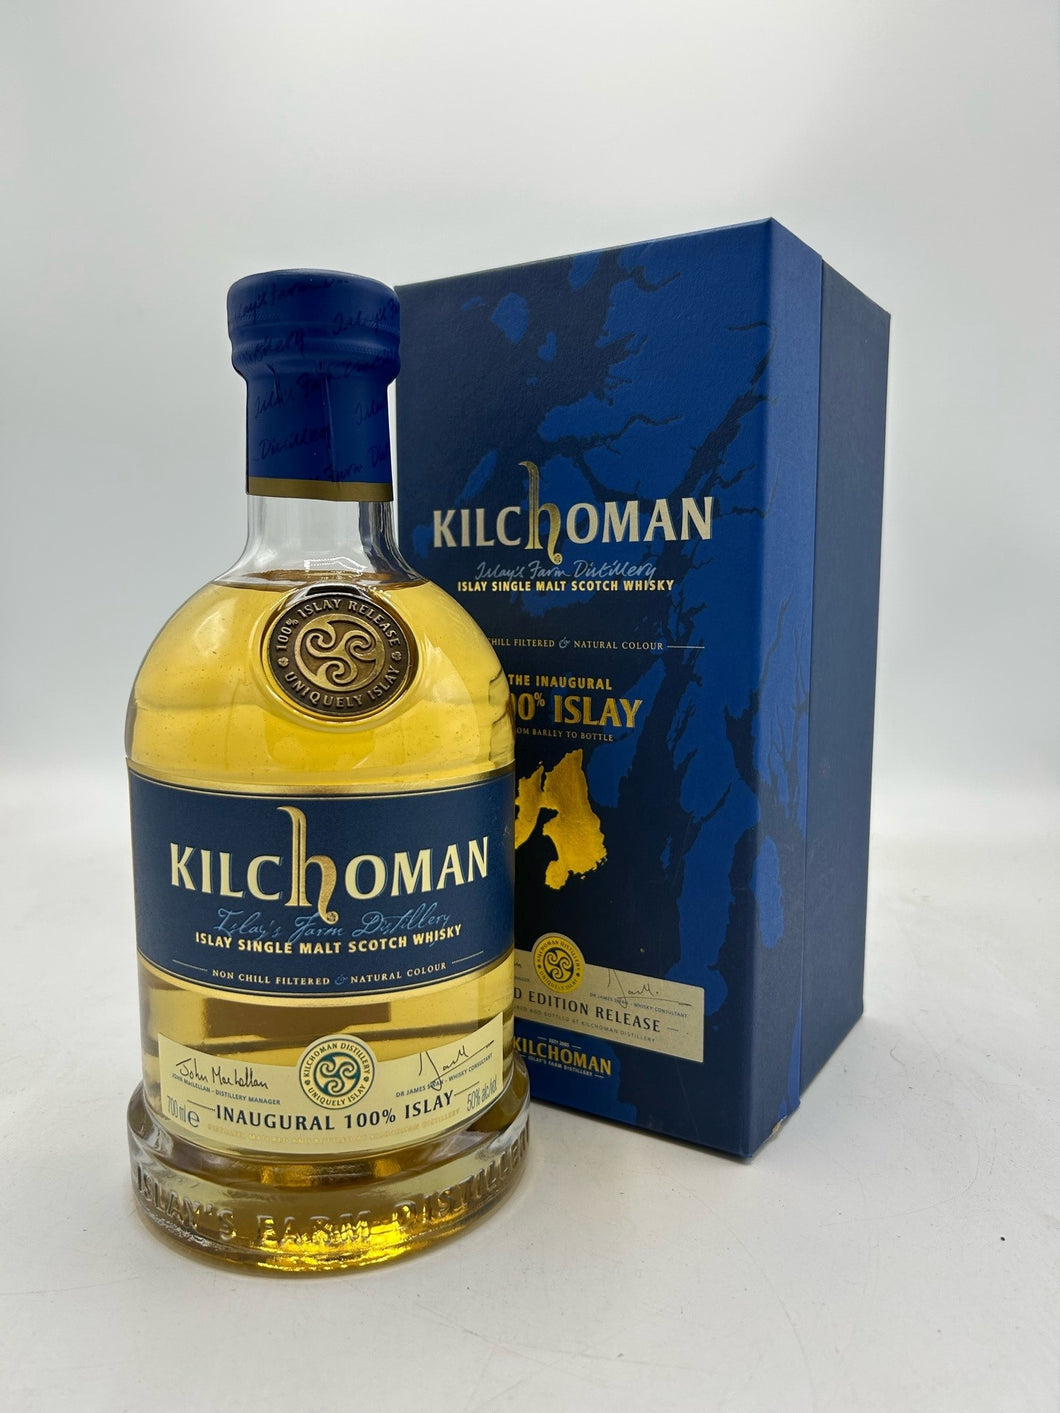 Kilchoman 100% Islay Inaugural Release